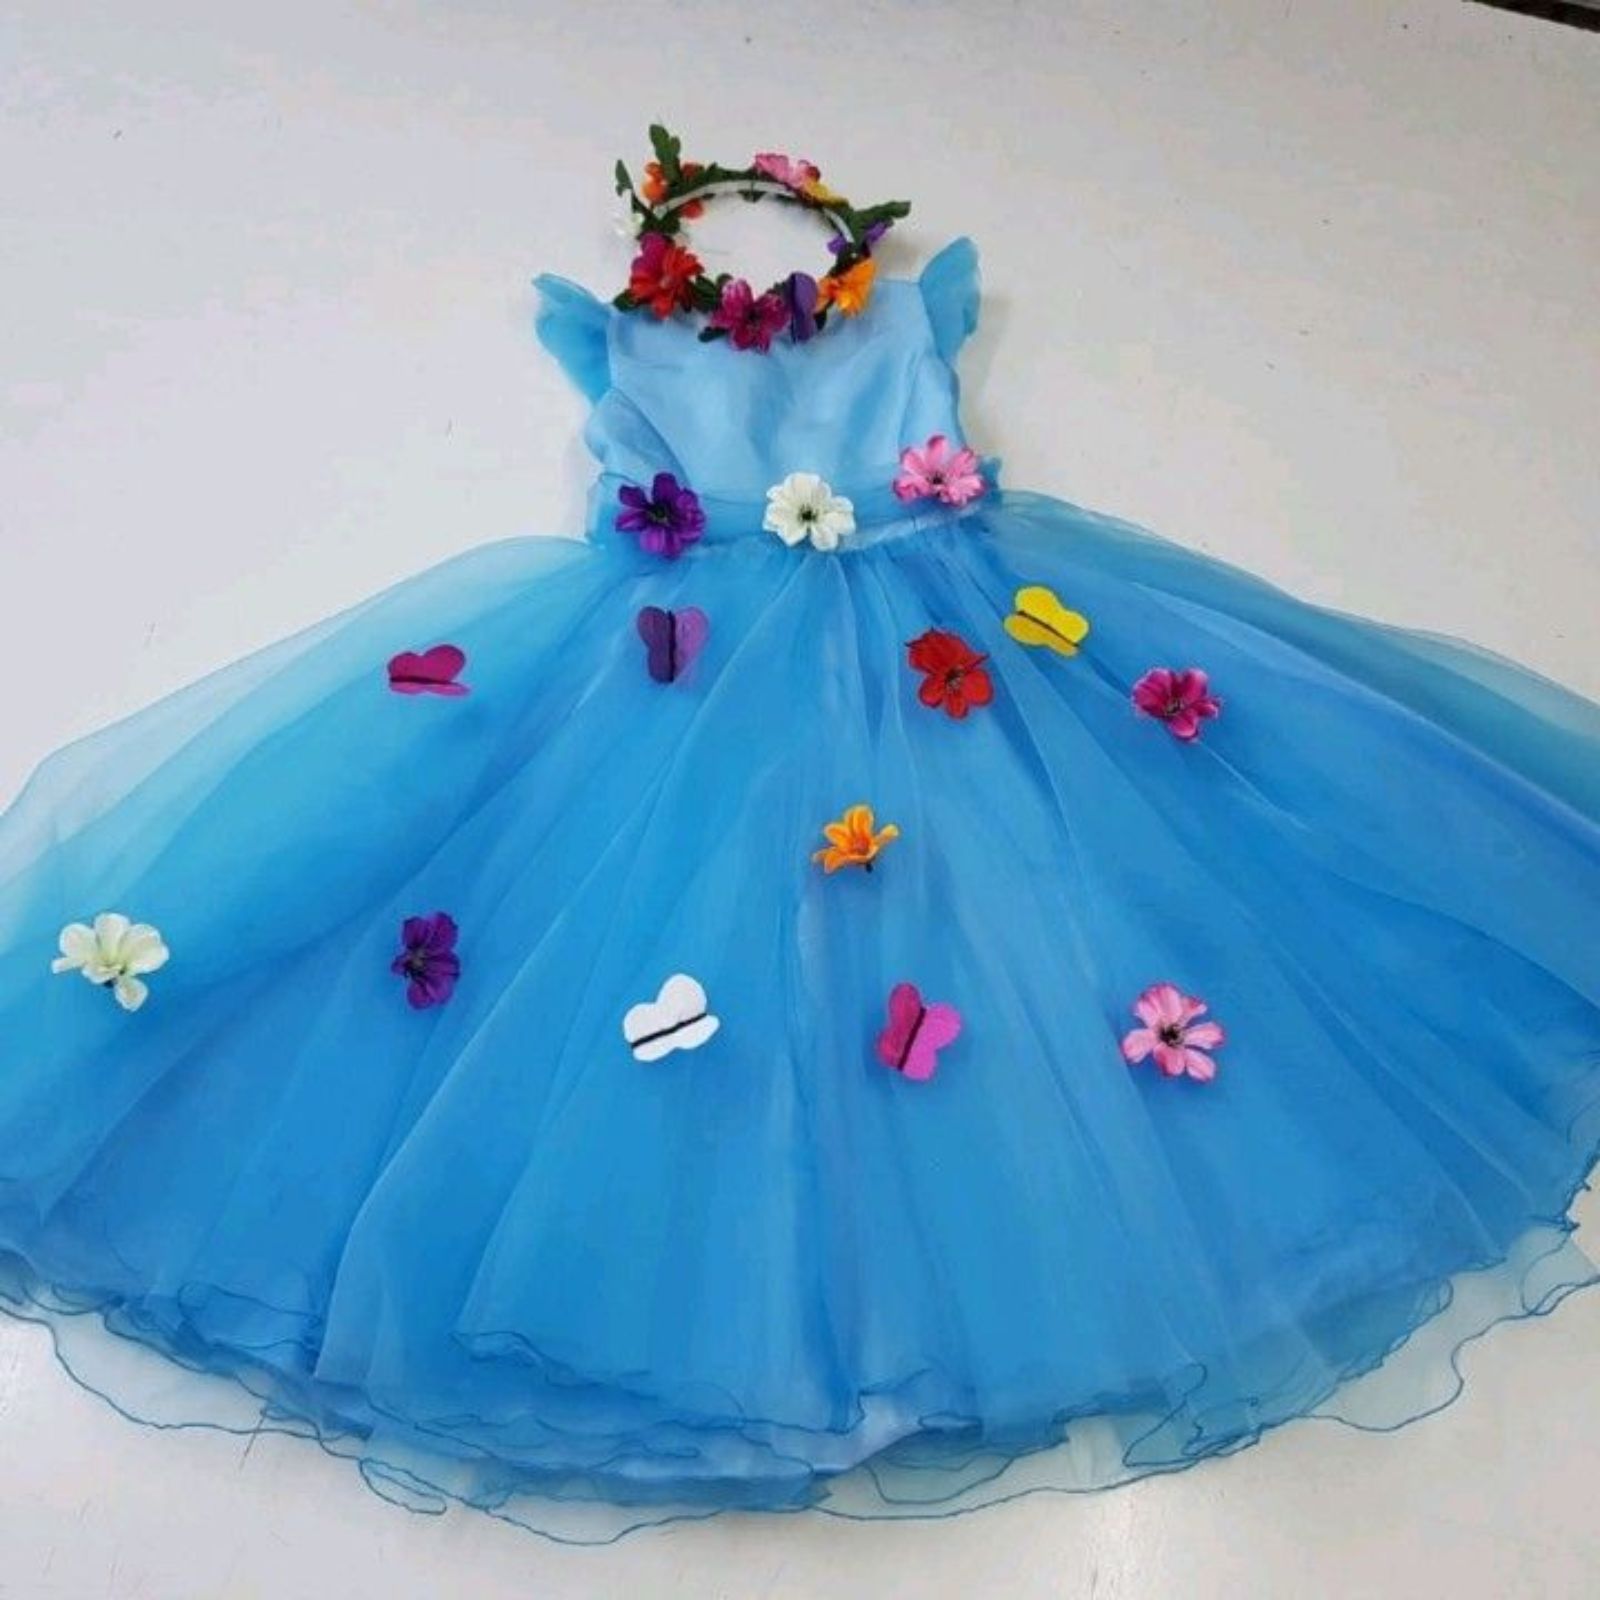 Prințesa bleu cu flori și fluturași